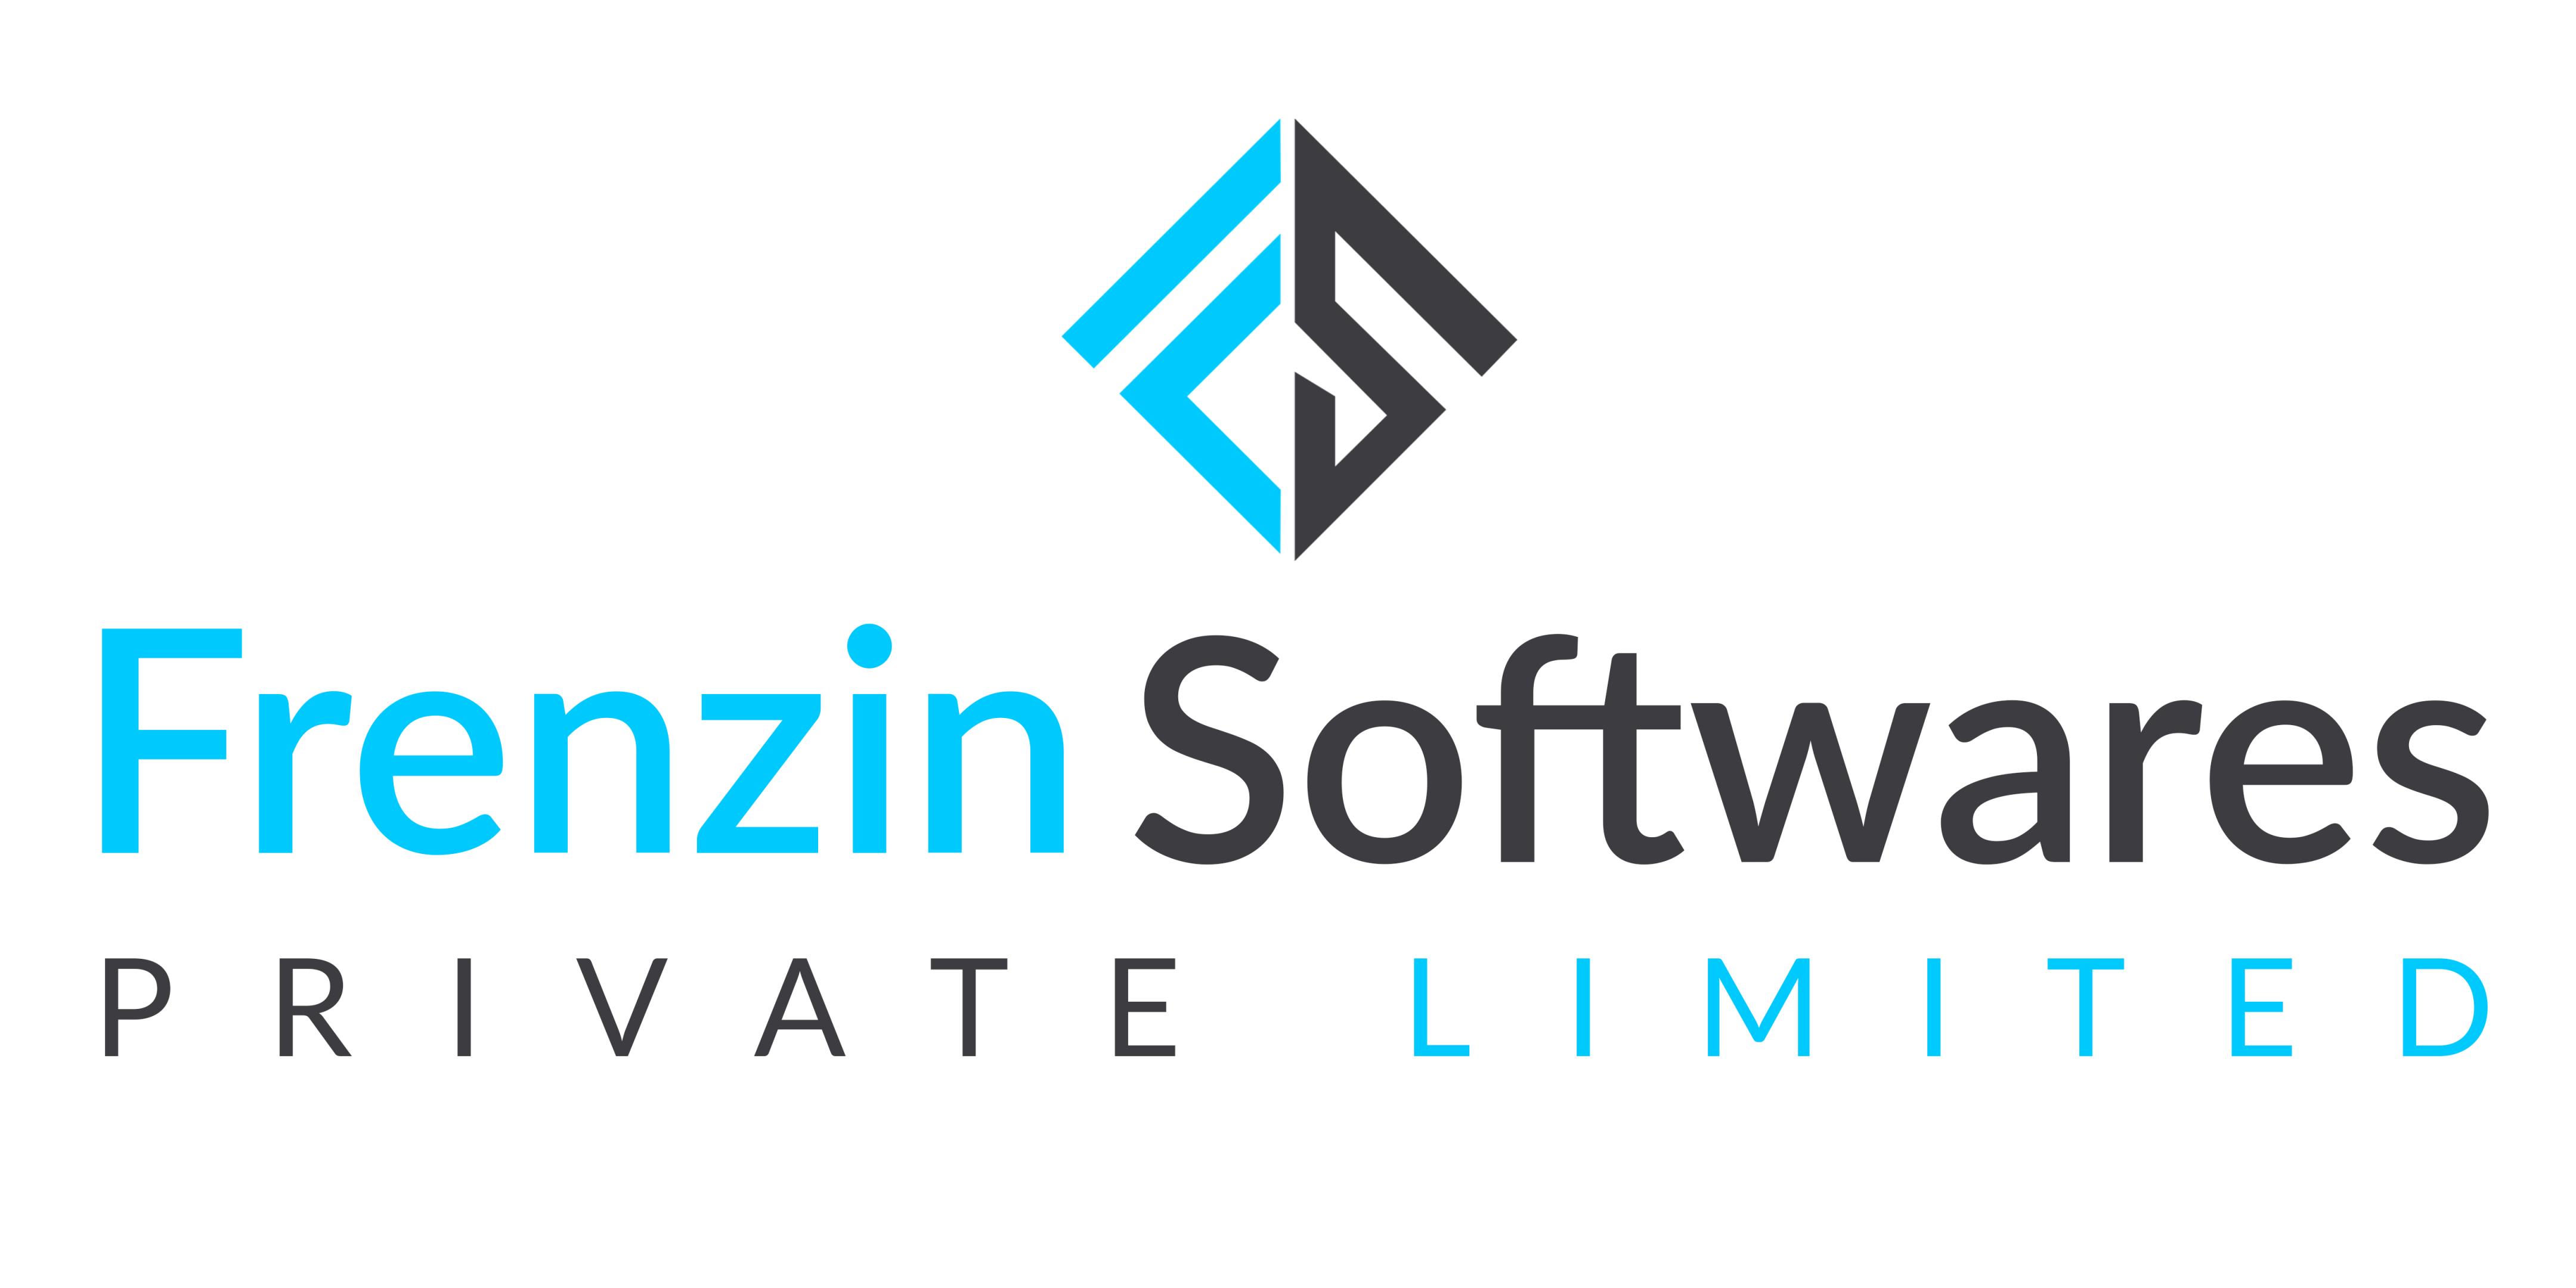 Frenzin Softwares Pvt.Ltd. profile on Qualified.One